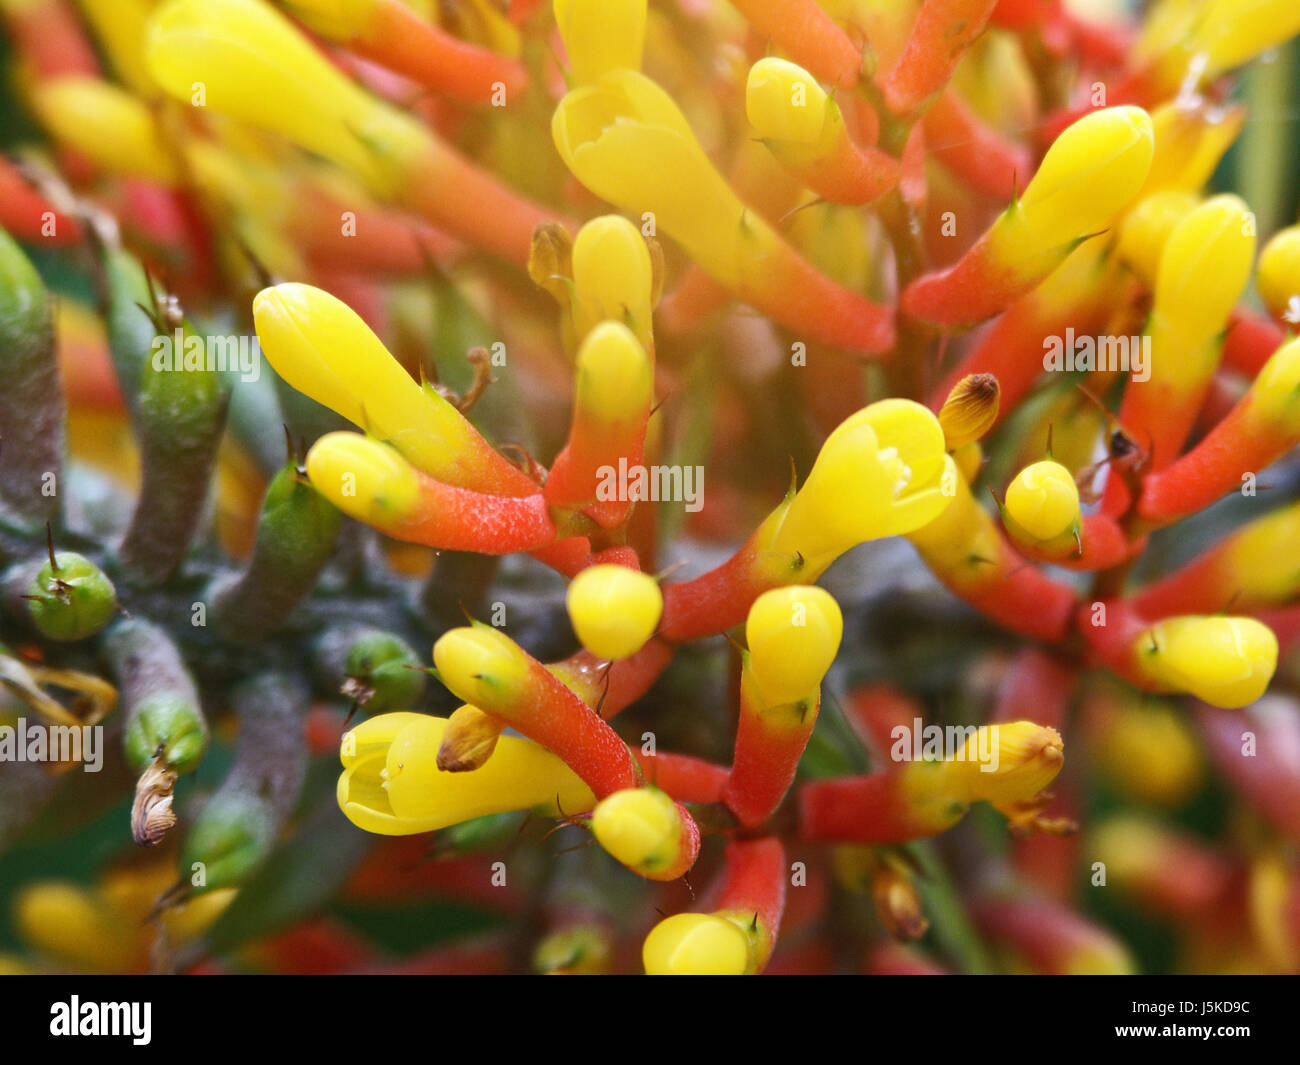 bloom blossom flourish flourishing coloured colourful gorgeous multifarious Stock Photo